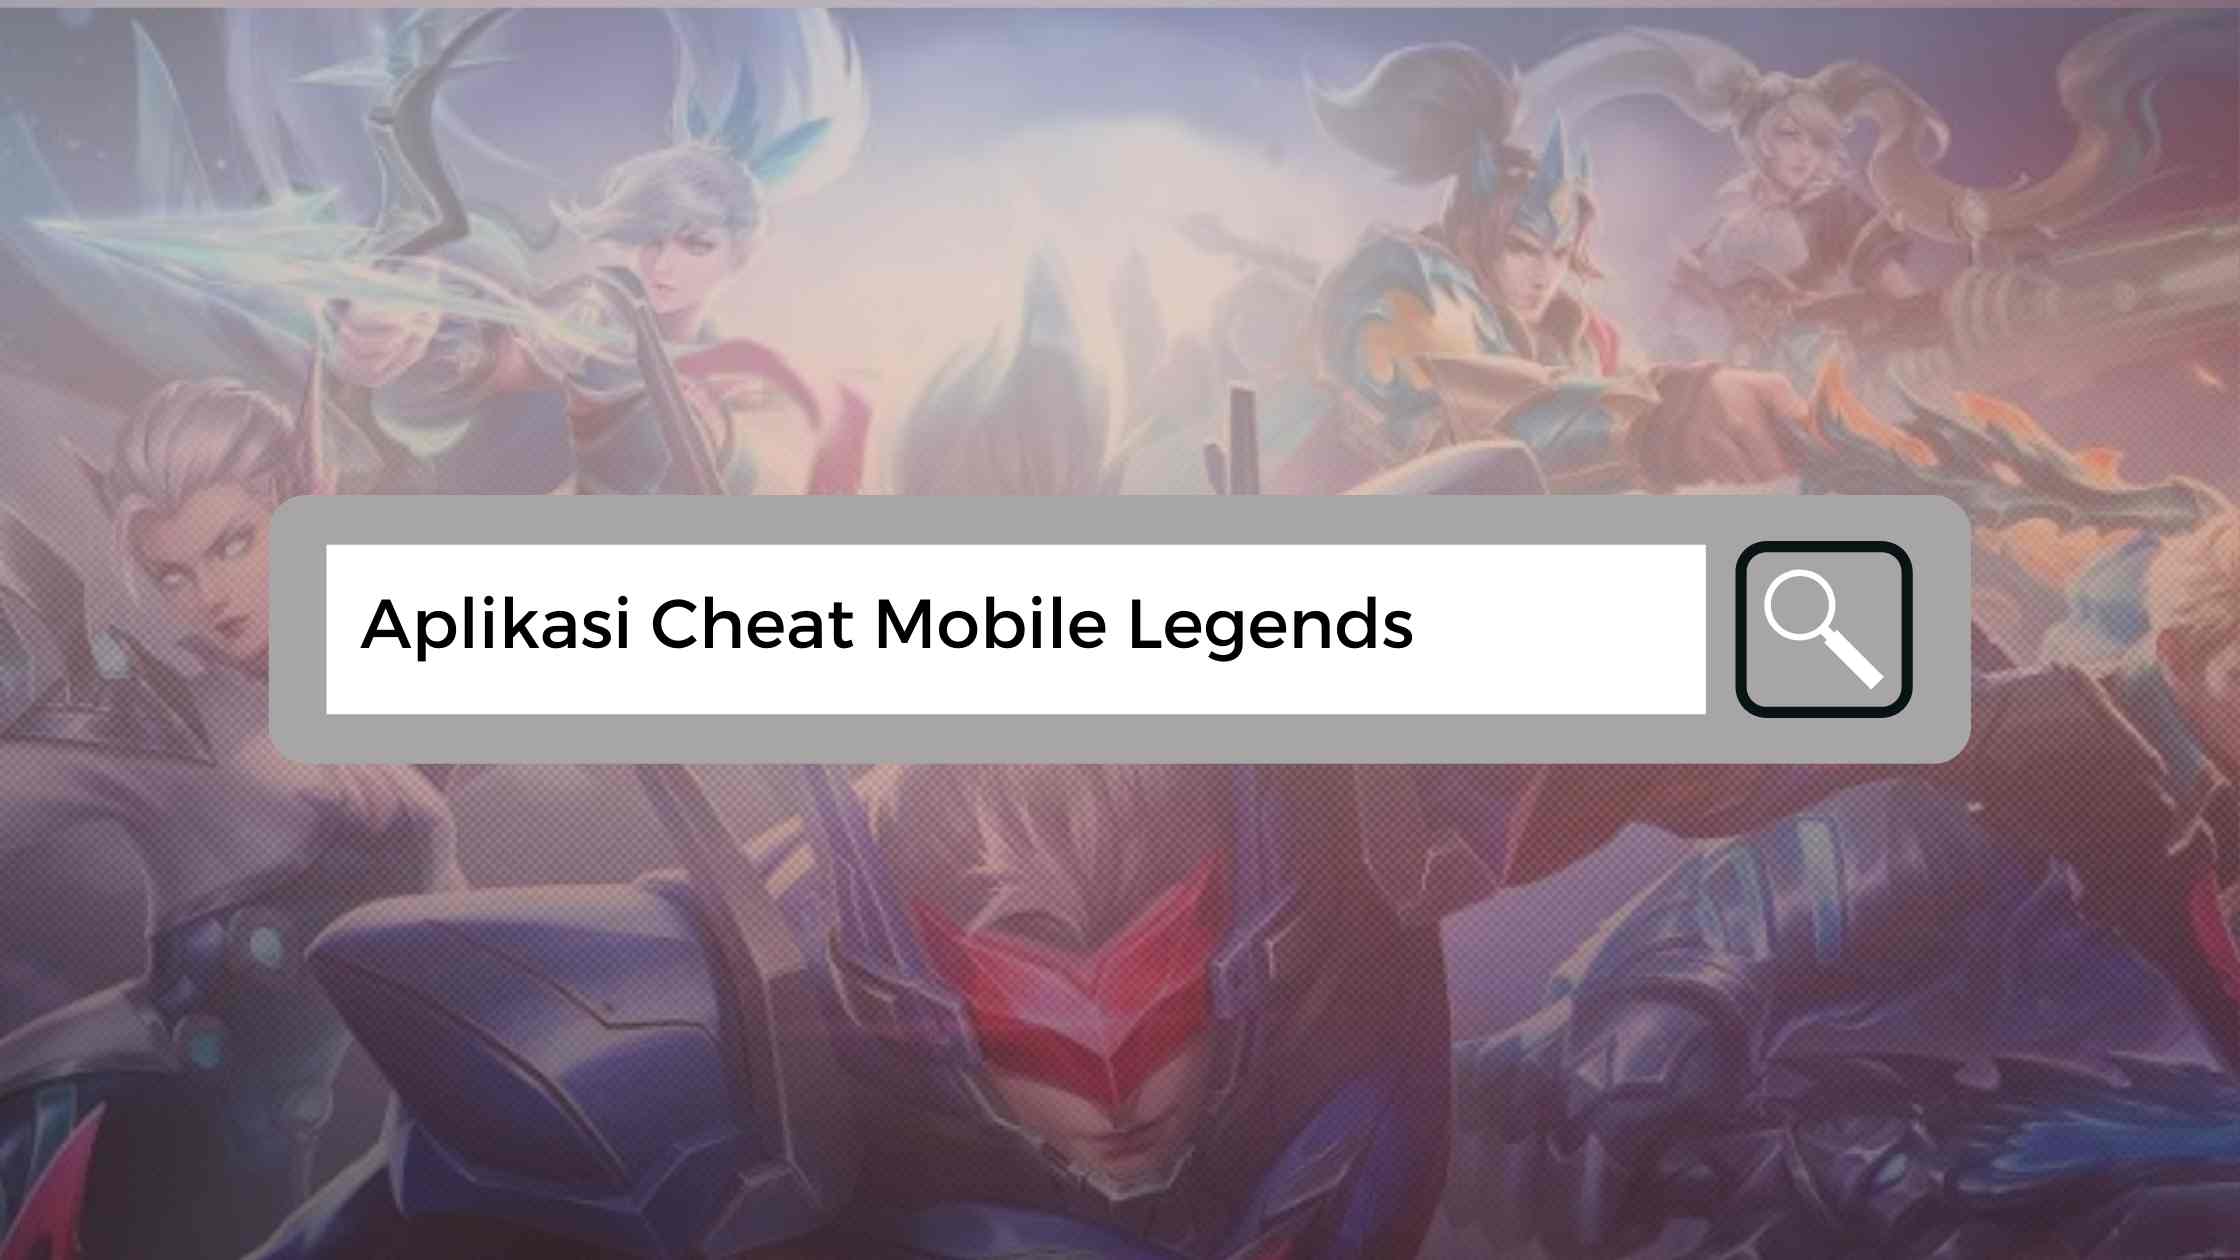 Cheat 1 Hit Main di Ranked! - Mobile Legends 